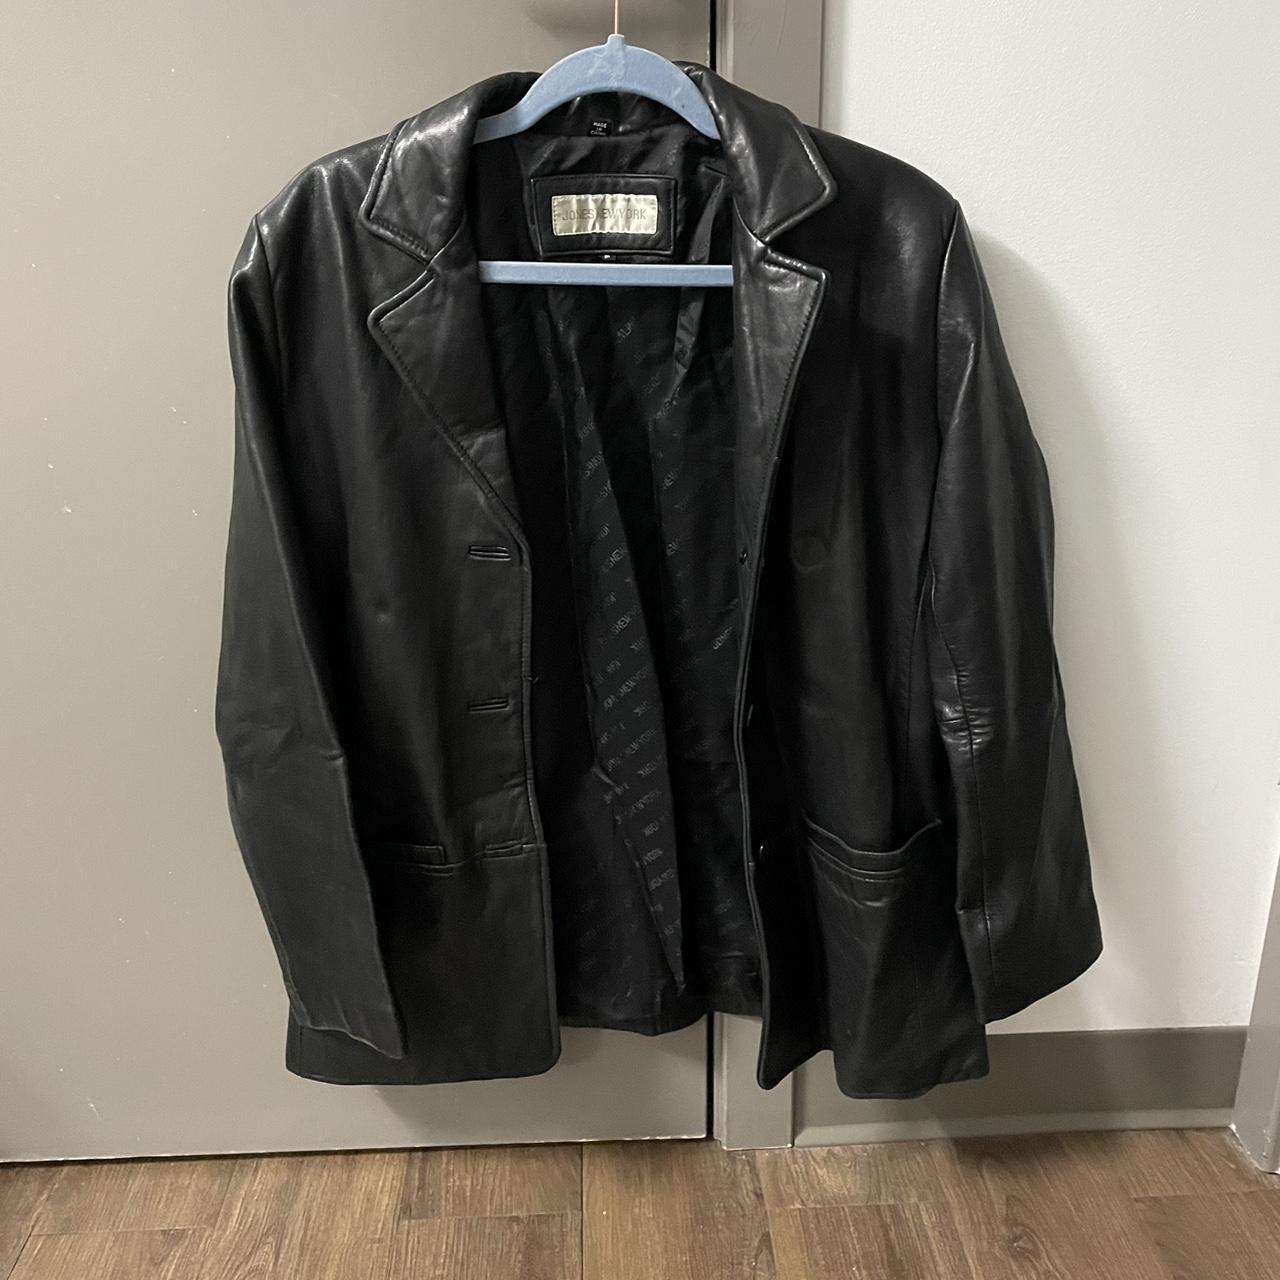 Jones NY Leather Jacket - Depop